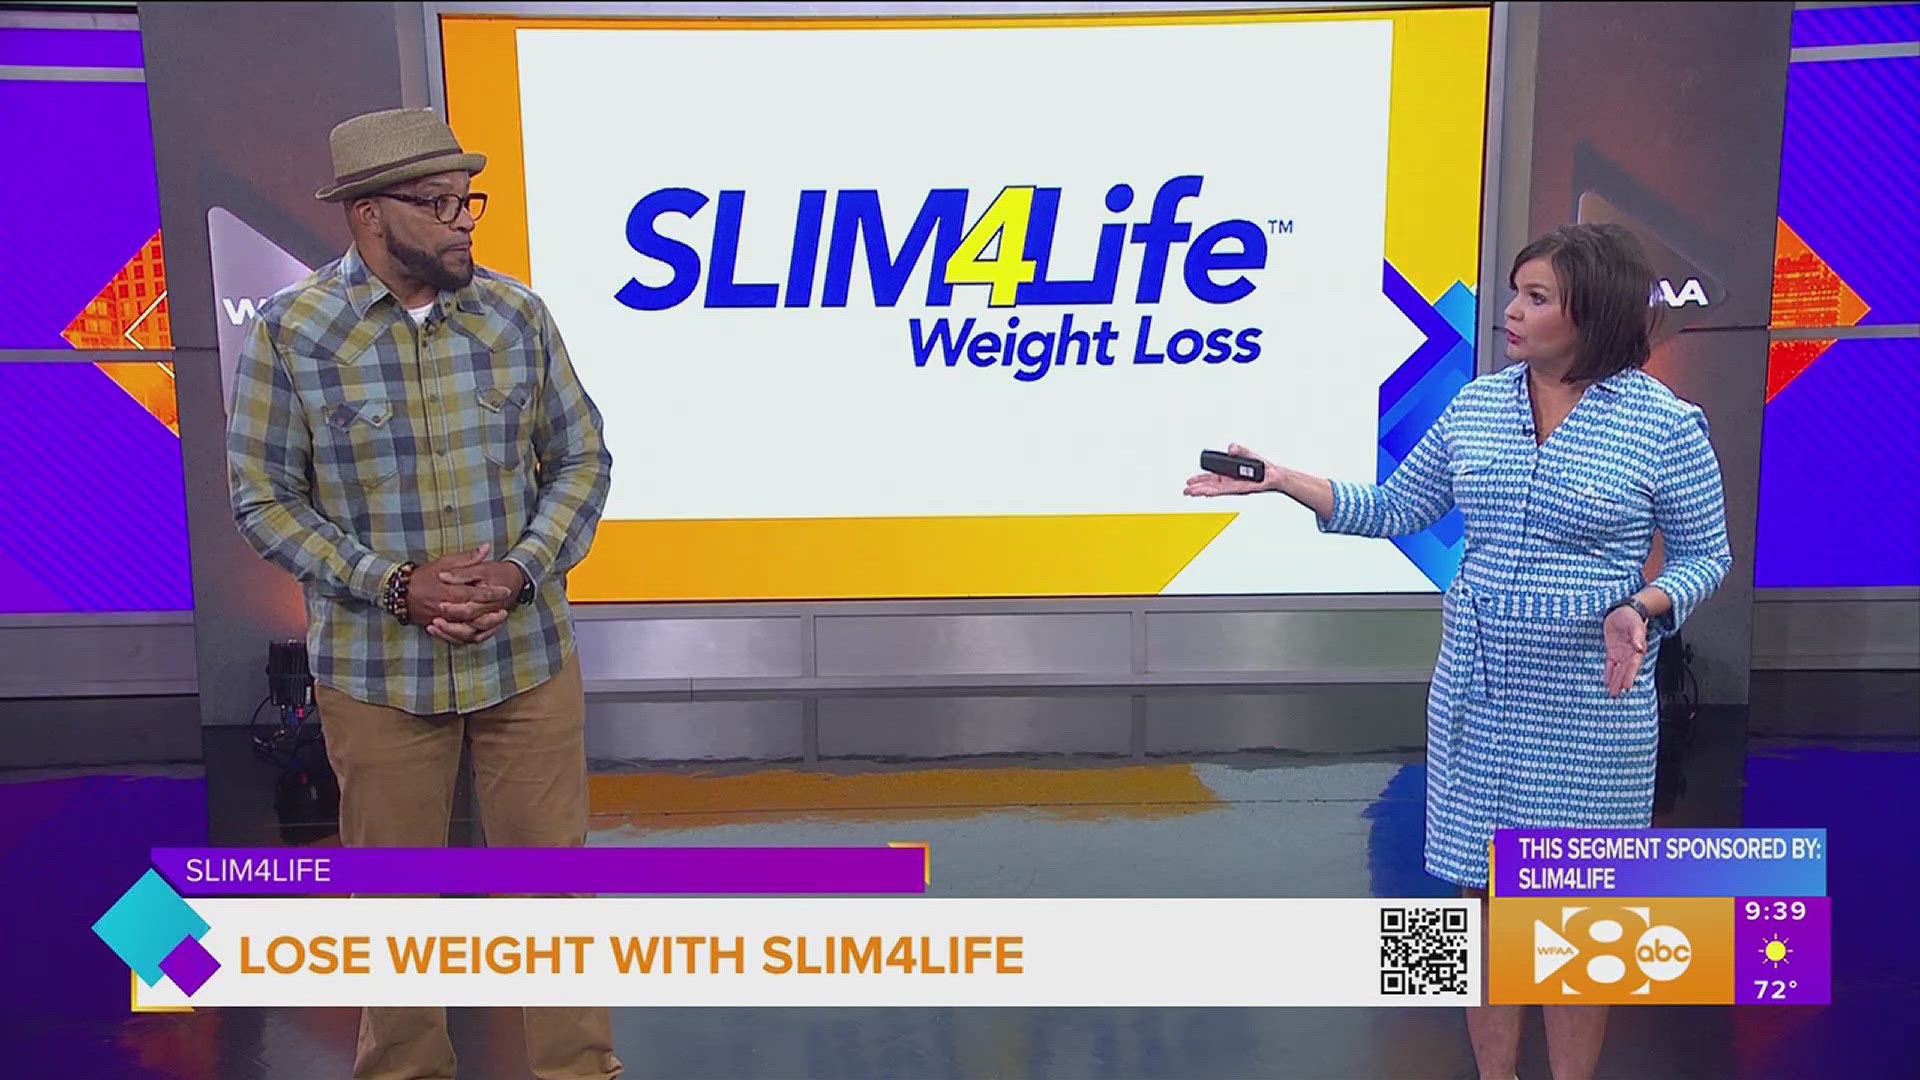 This segment is sponsored by Slim4Life.